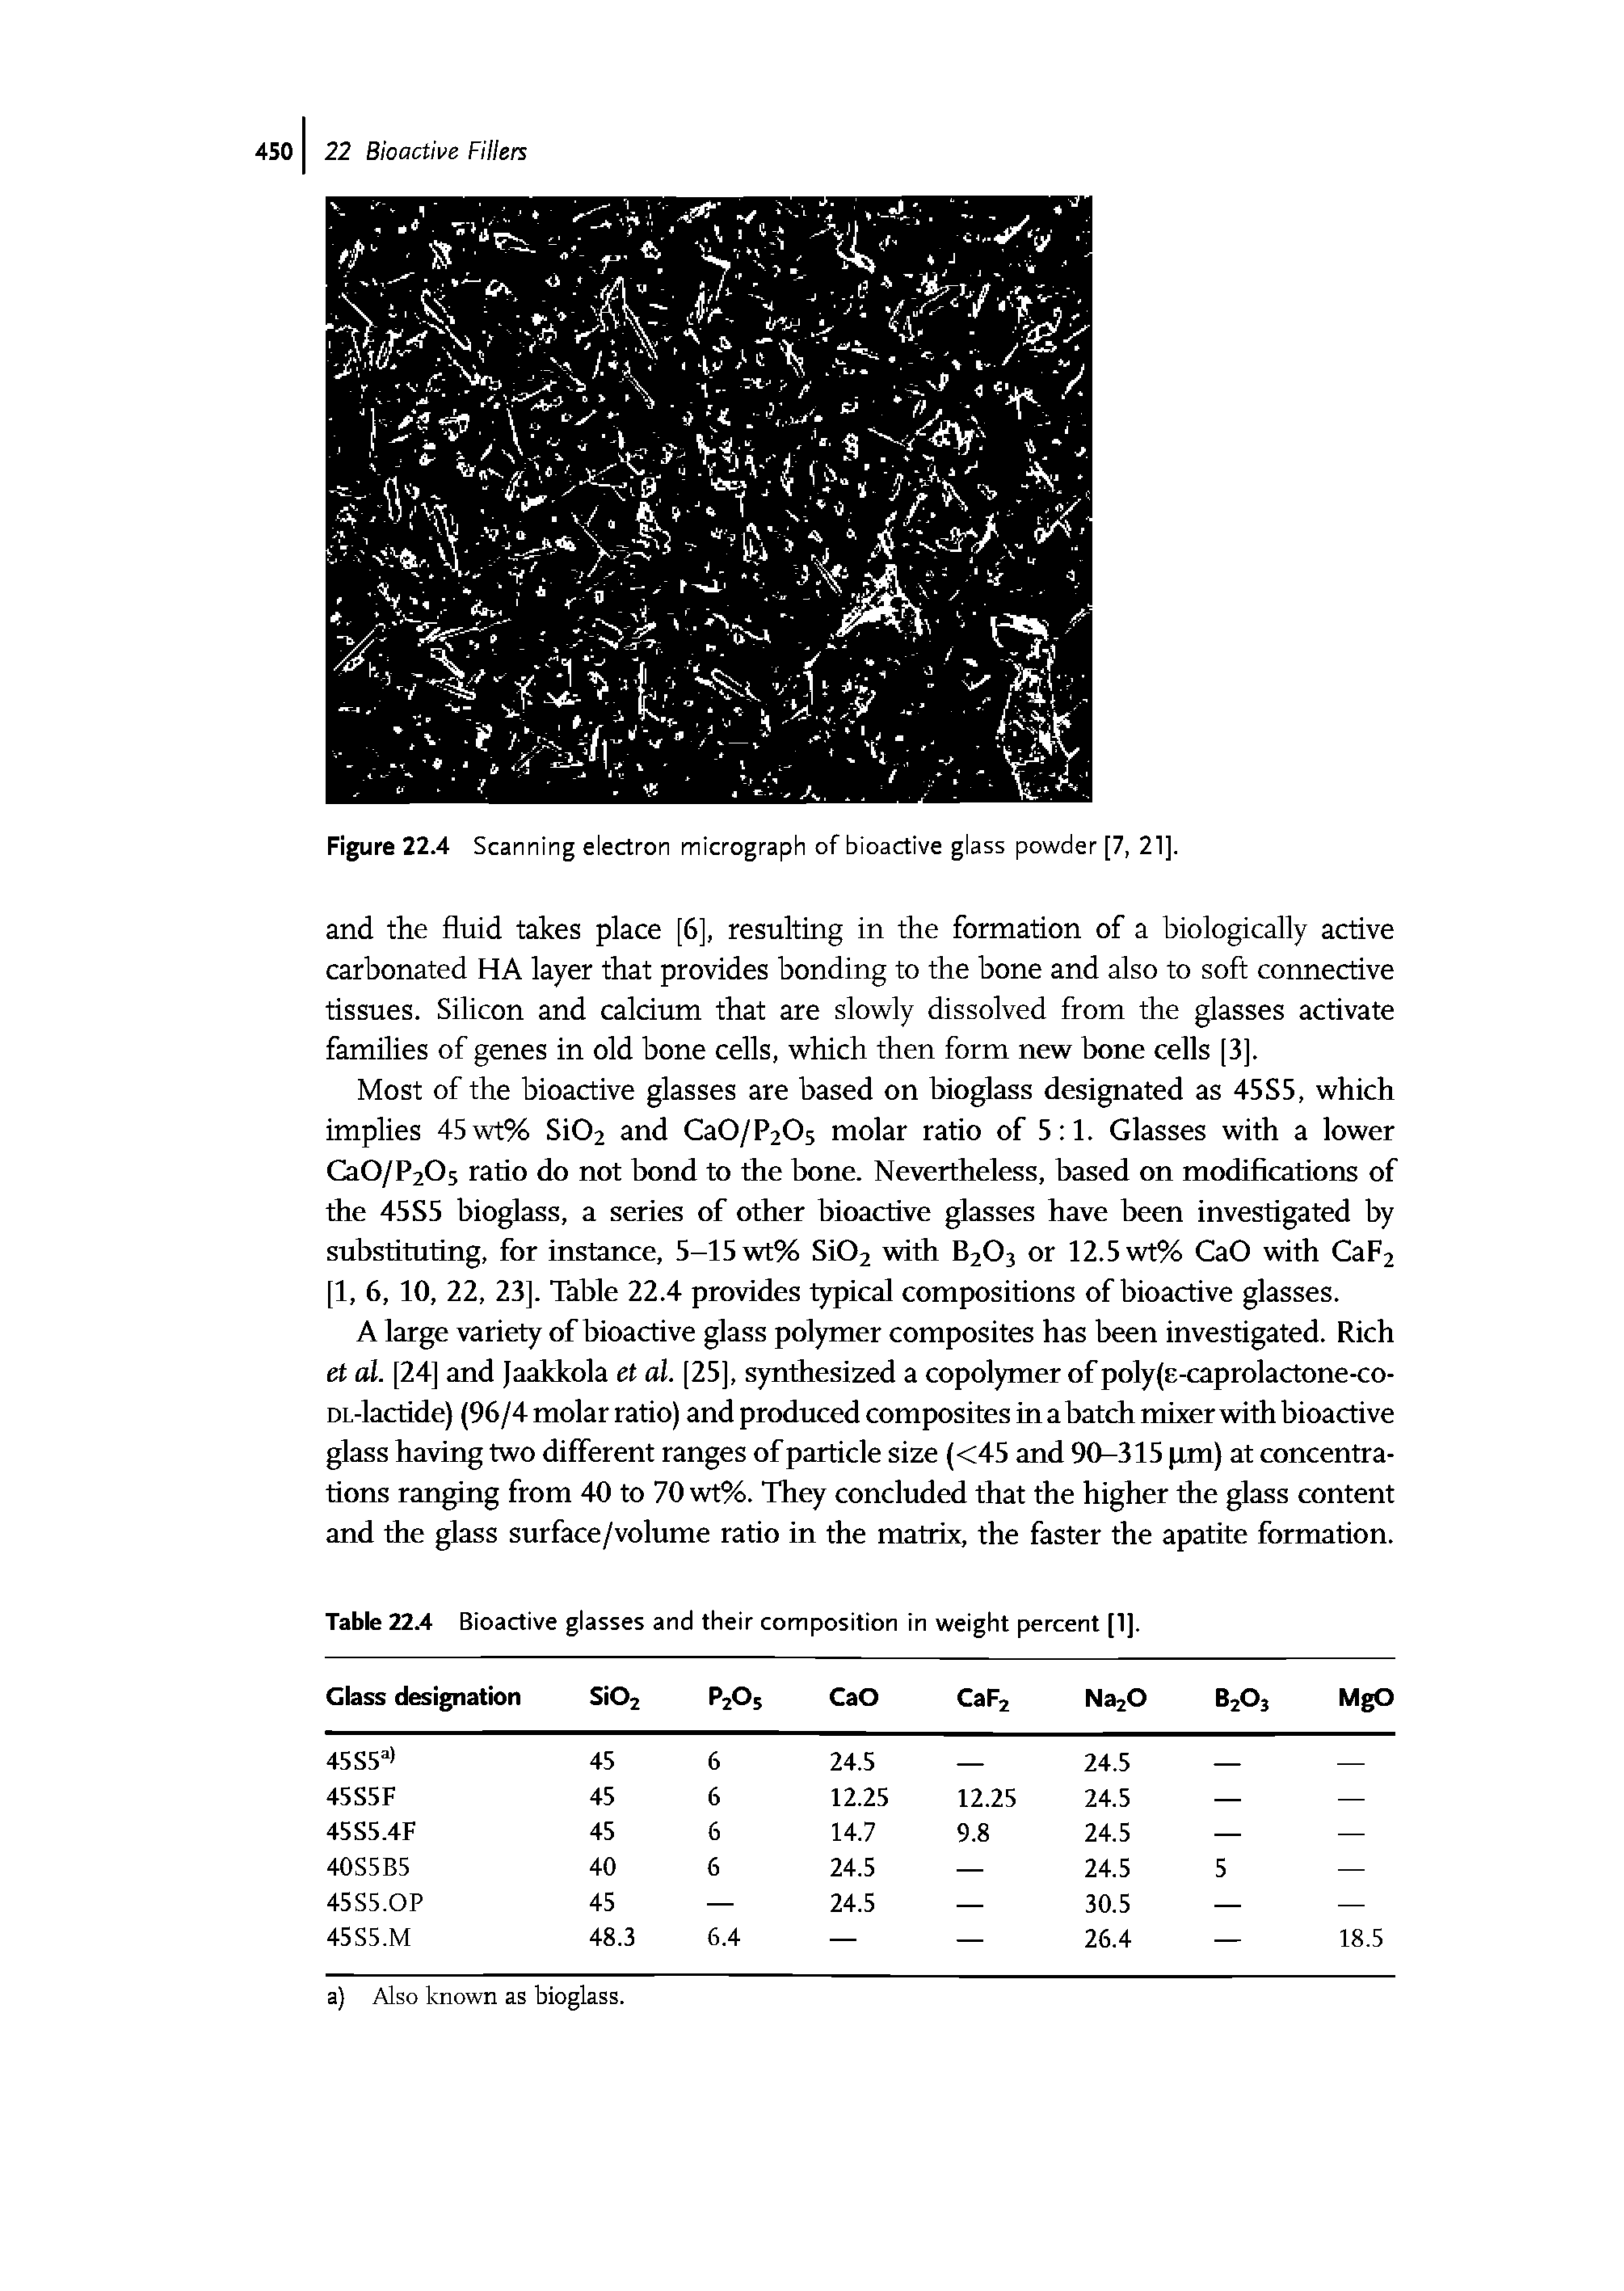 Figure 22.4 Scanning electron micrograph of bioactive glass powder [7, 21].